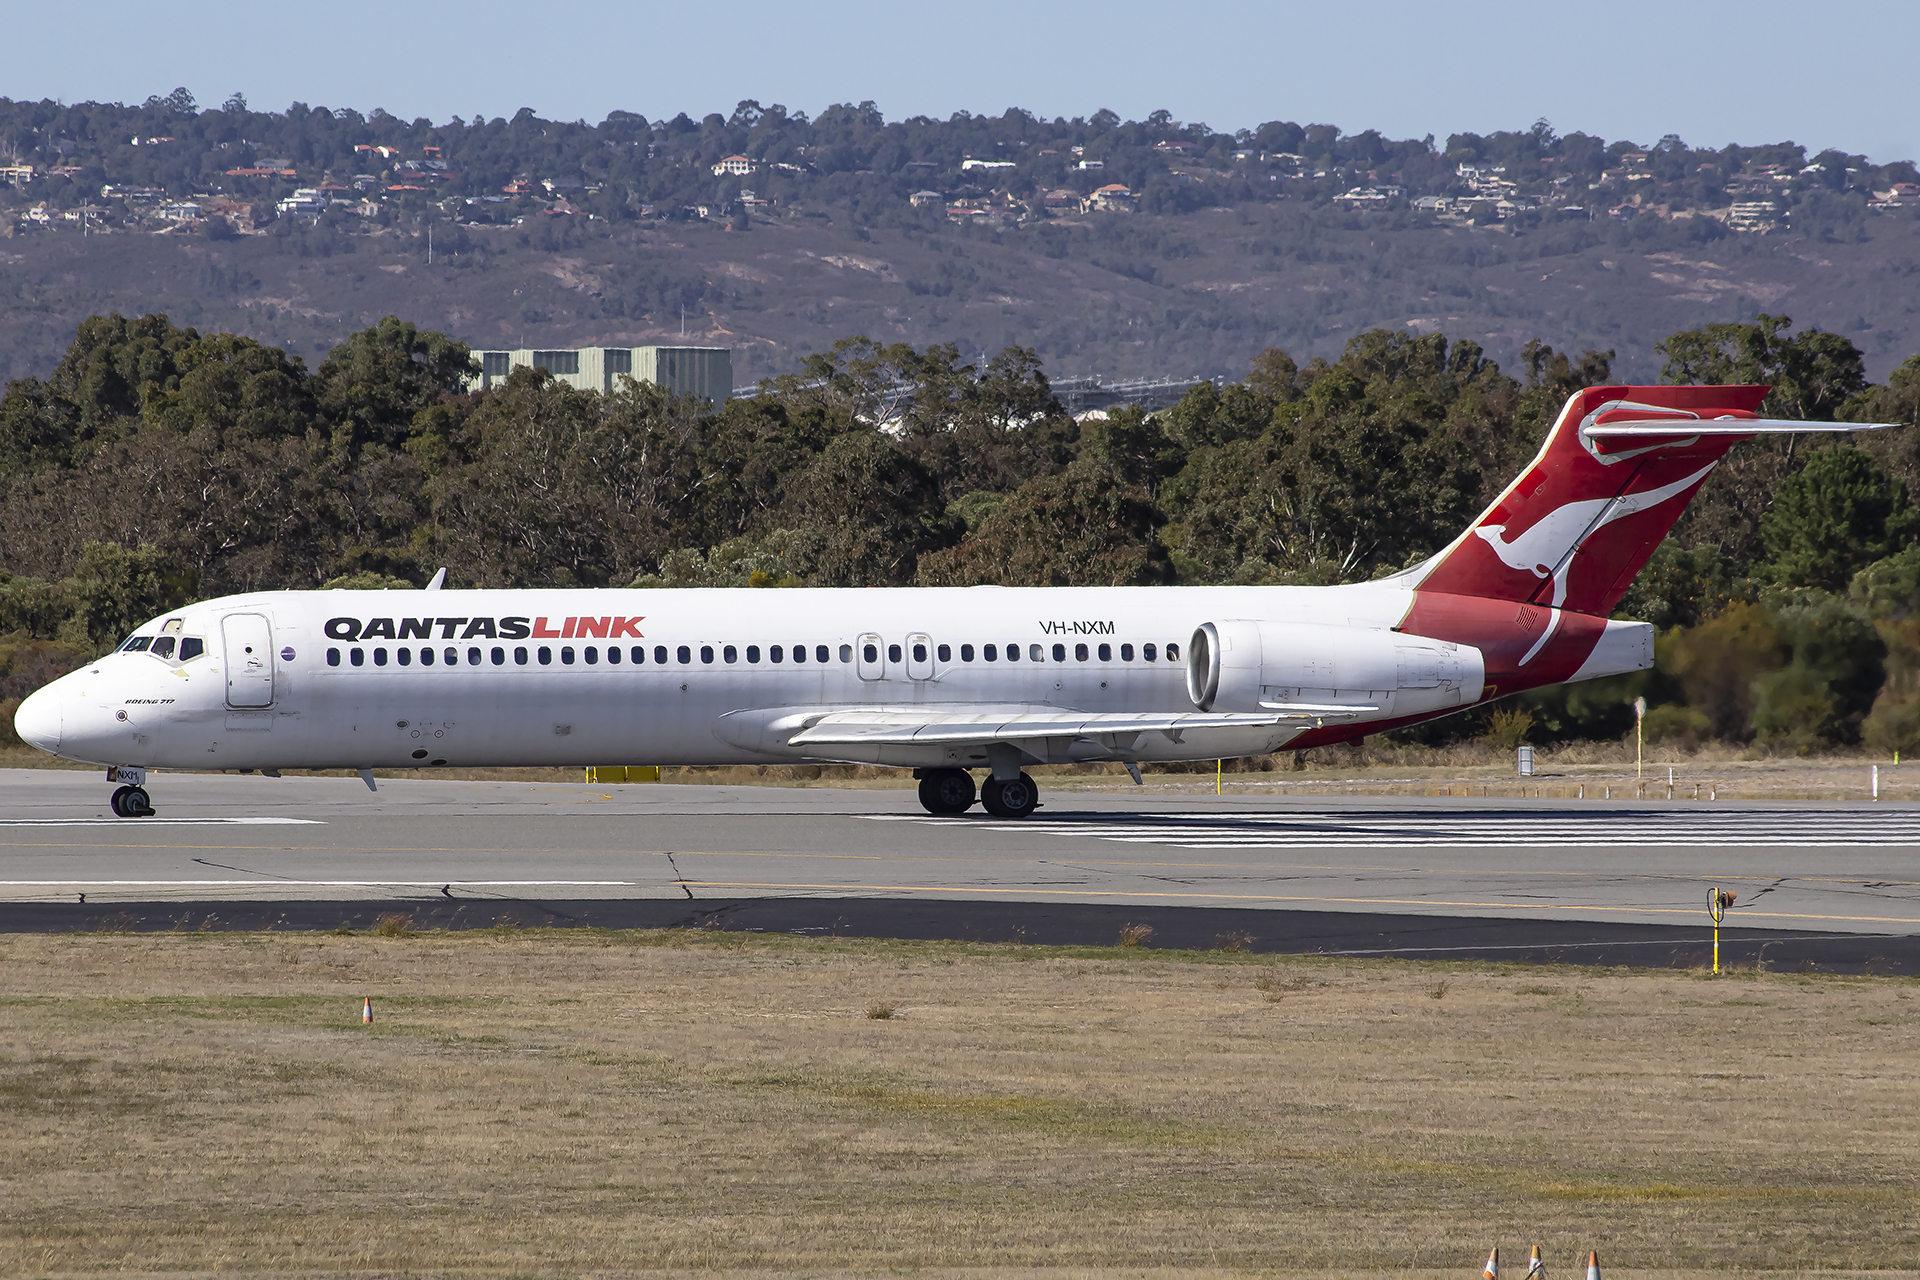 VH-NXM/VHNXM Qantaslink Boeing 717 Airframe Information - AVSpotters.com